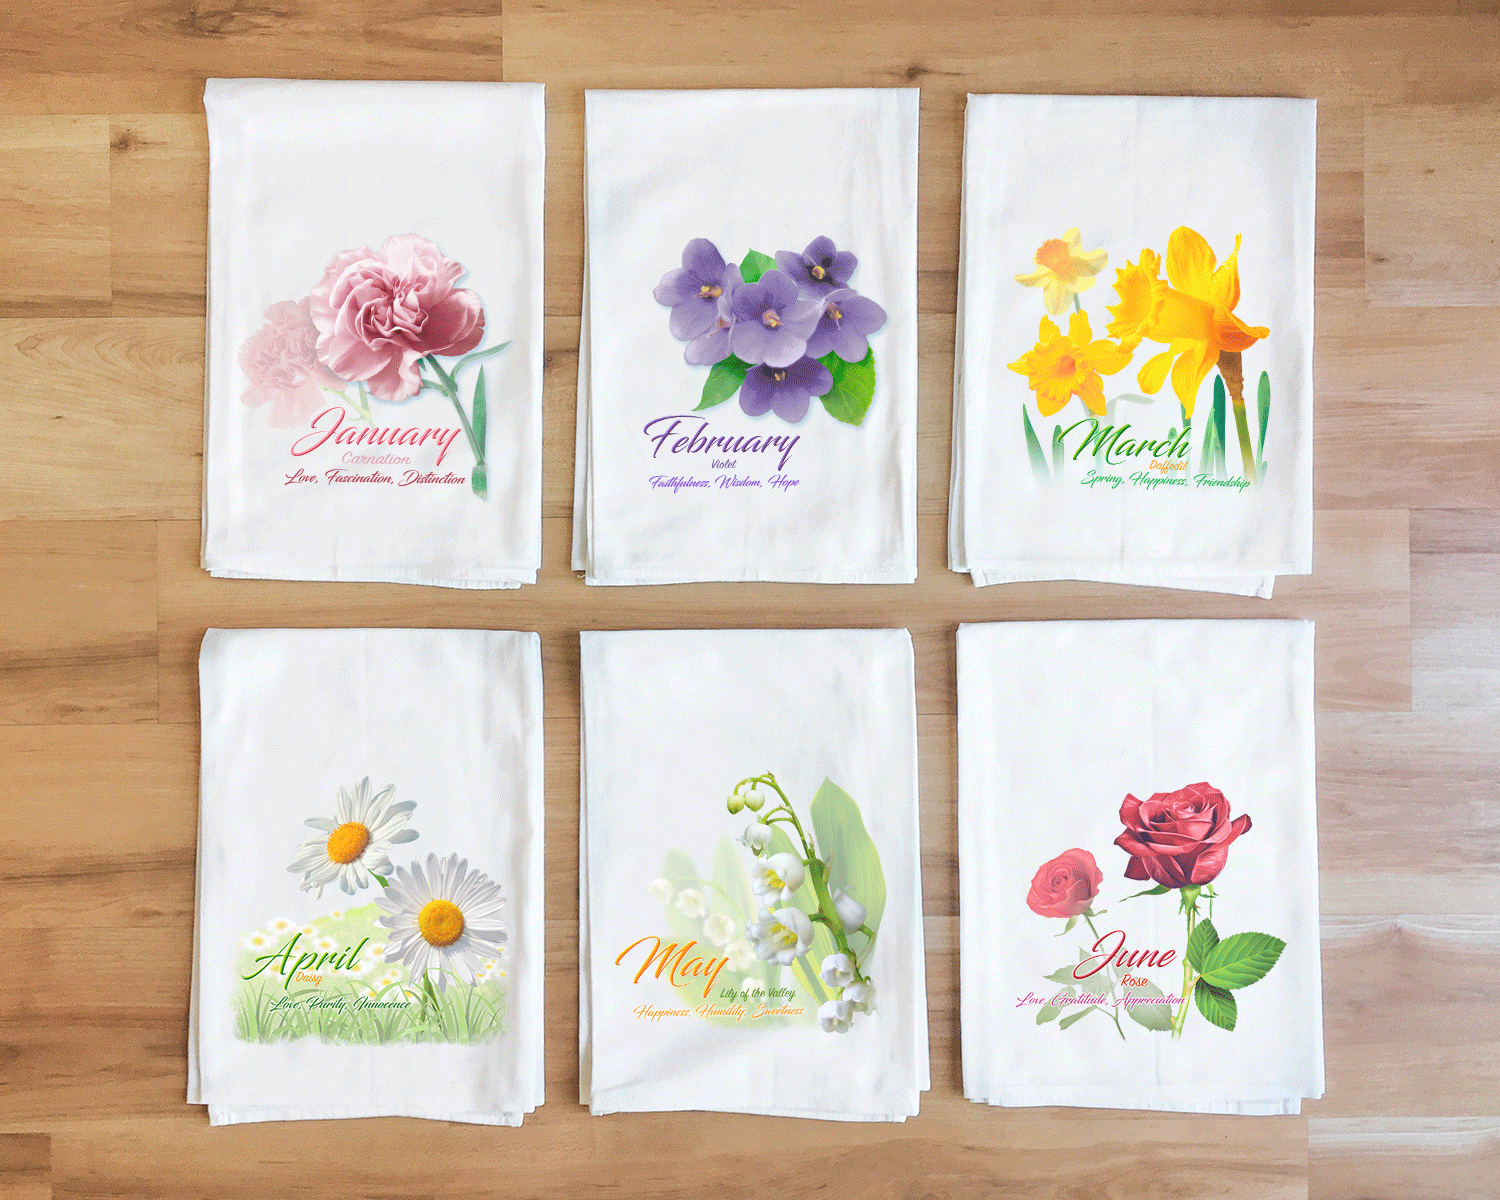 Carnation - January Flower Towel